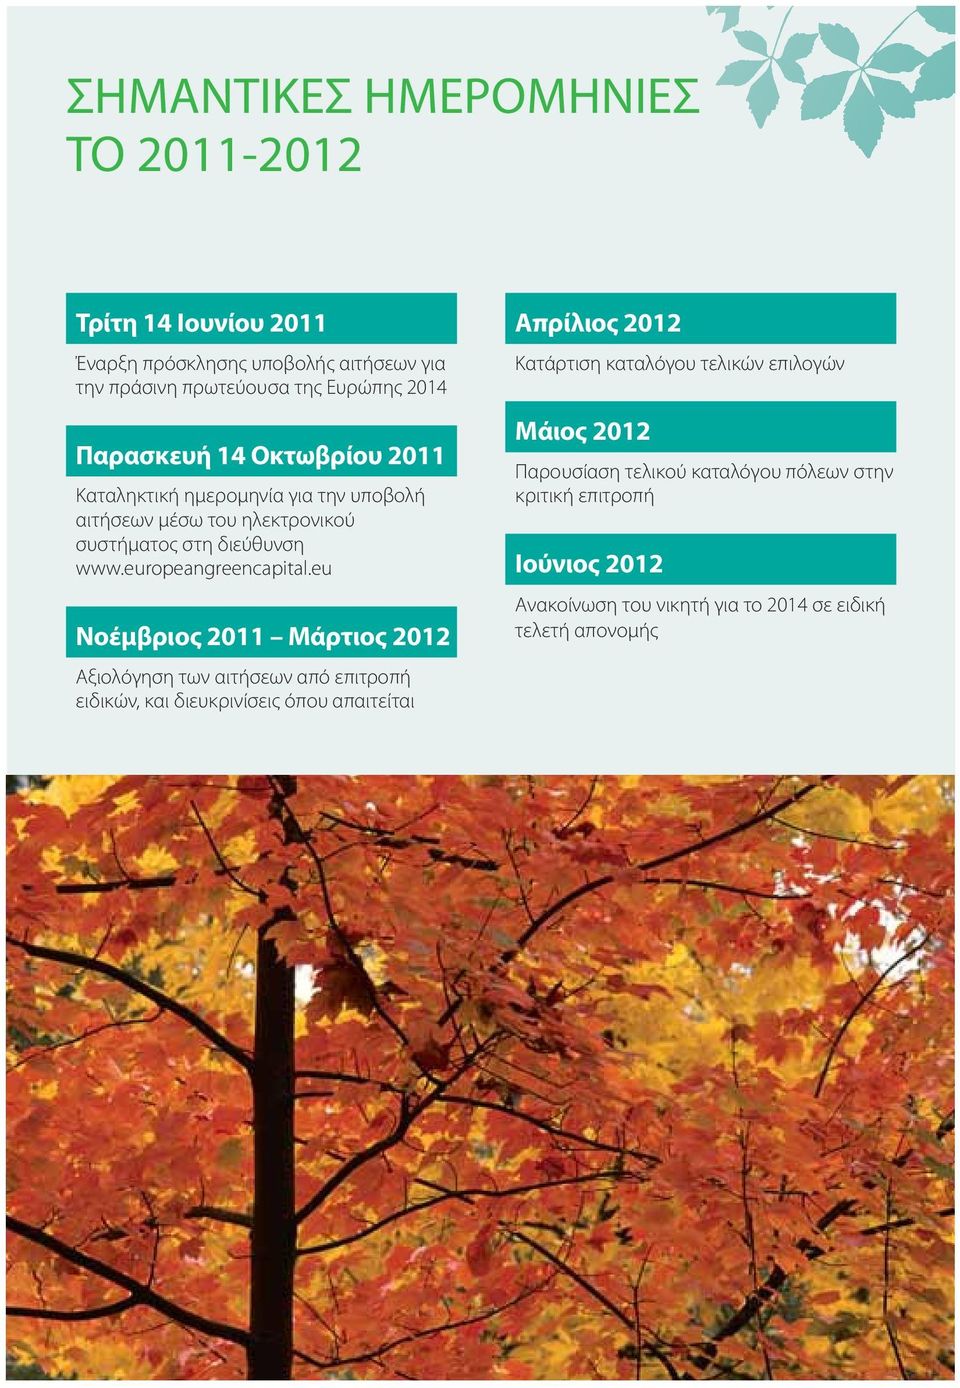 eu Νοέμβριος 2011 Μάρτιος 2012 Αξιολόγηση των αιτήσεων από επιτροπή ειδικών, και διευκρινίσεις όπου απαιτείται Απρίλιος 2012 Κατάρτιση καταλόγου